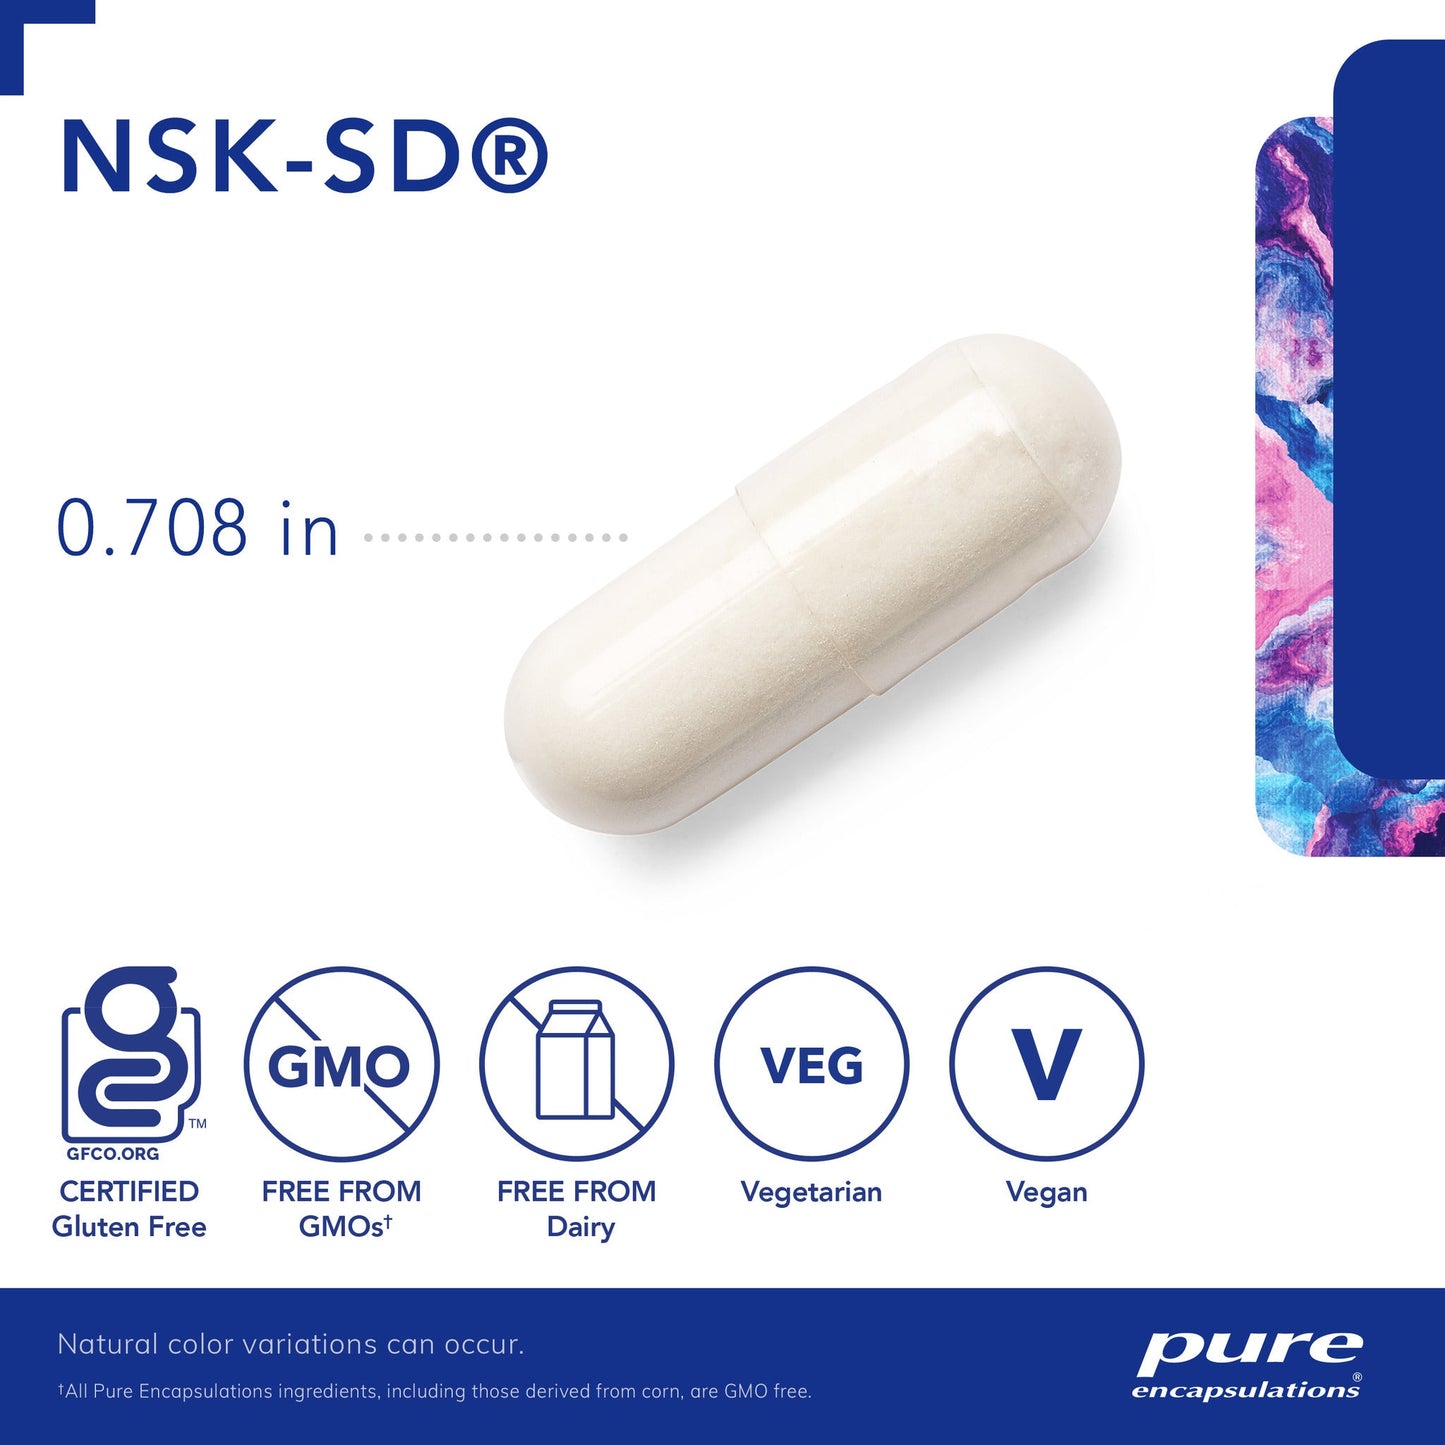 NSK SD (Nattokinase) 100 mg.